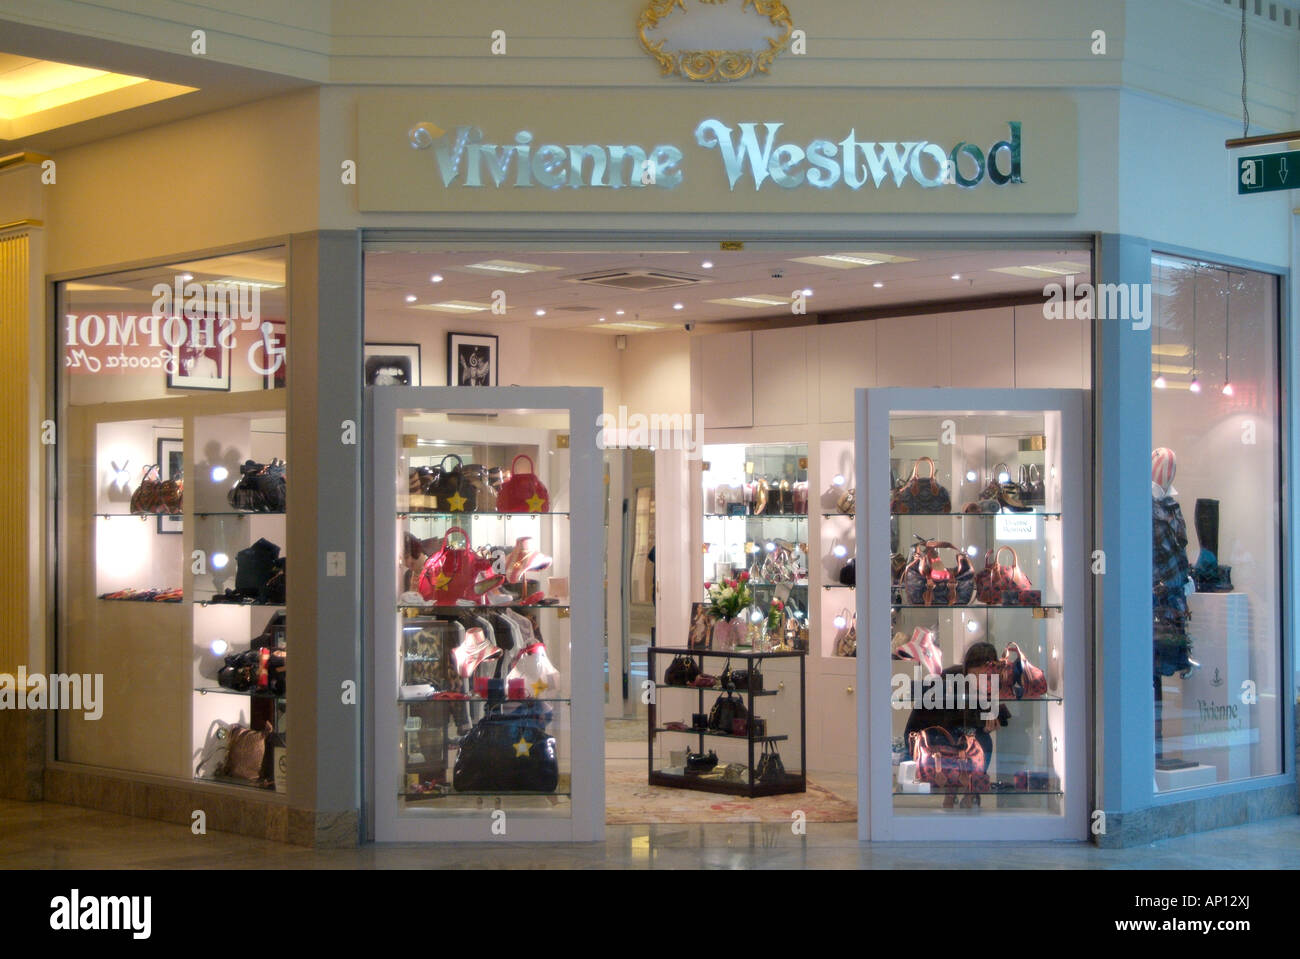 vivienne westwood window store Arndale UK United Kingdom England clothes garment men women retail GB Great Bri Photo - Alamy